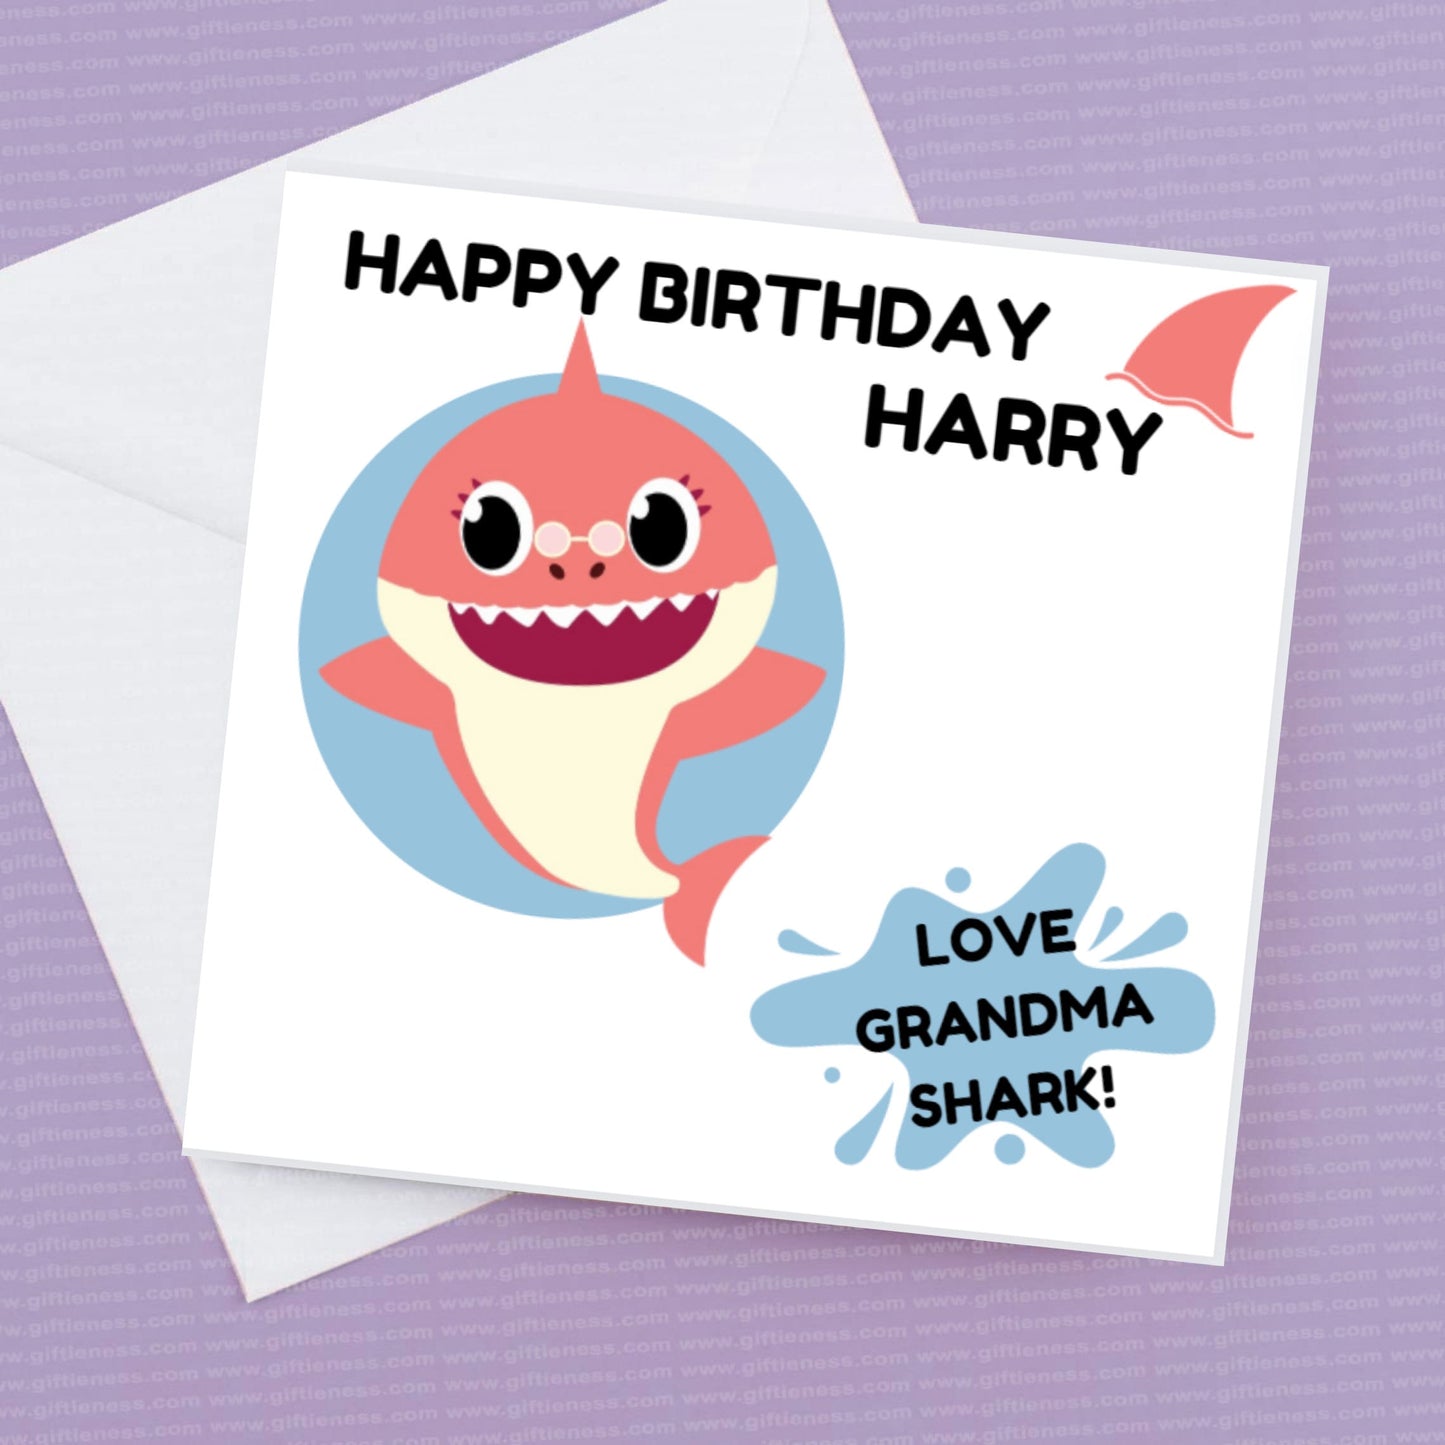 Personalised Happy Birthday Baby Shark card from Grandma Shark